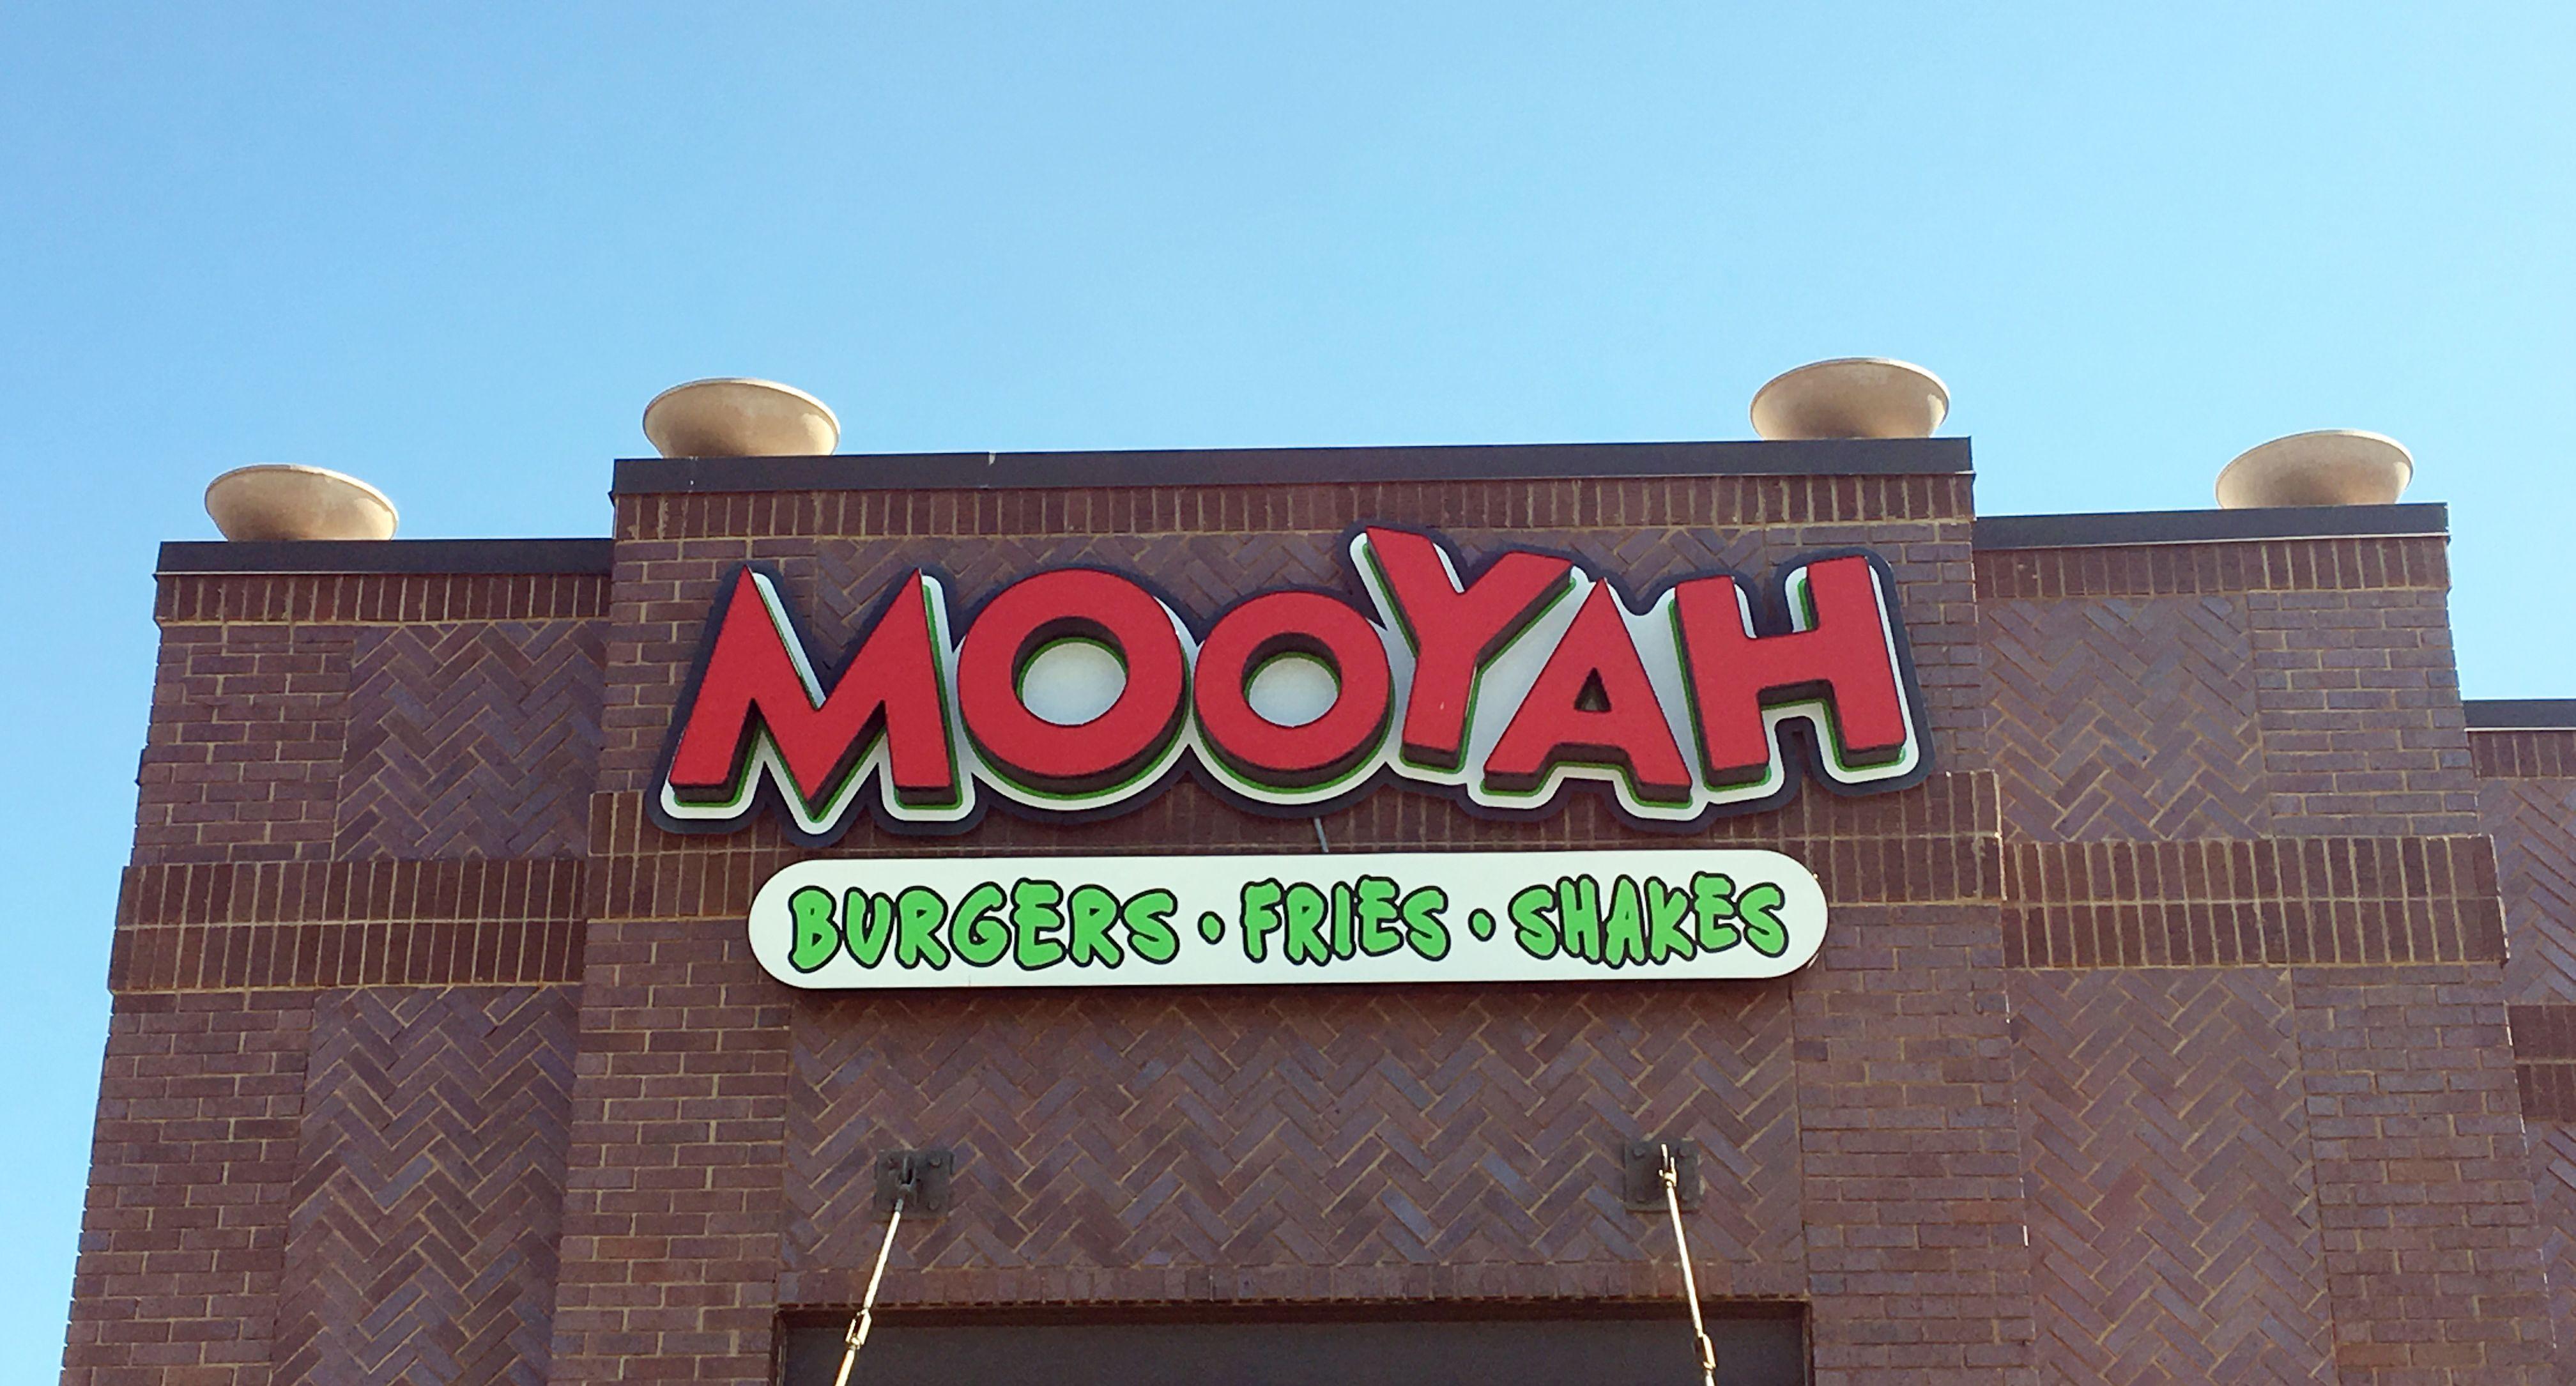 MOOYAH Logo - File:MOOYAH-logo.jpg - Wikimedia Commons